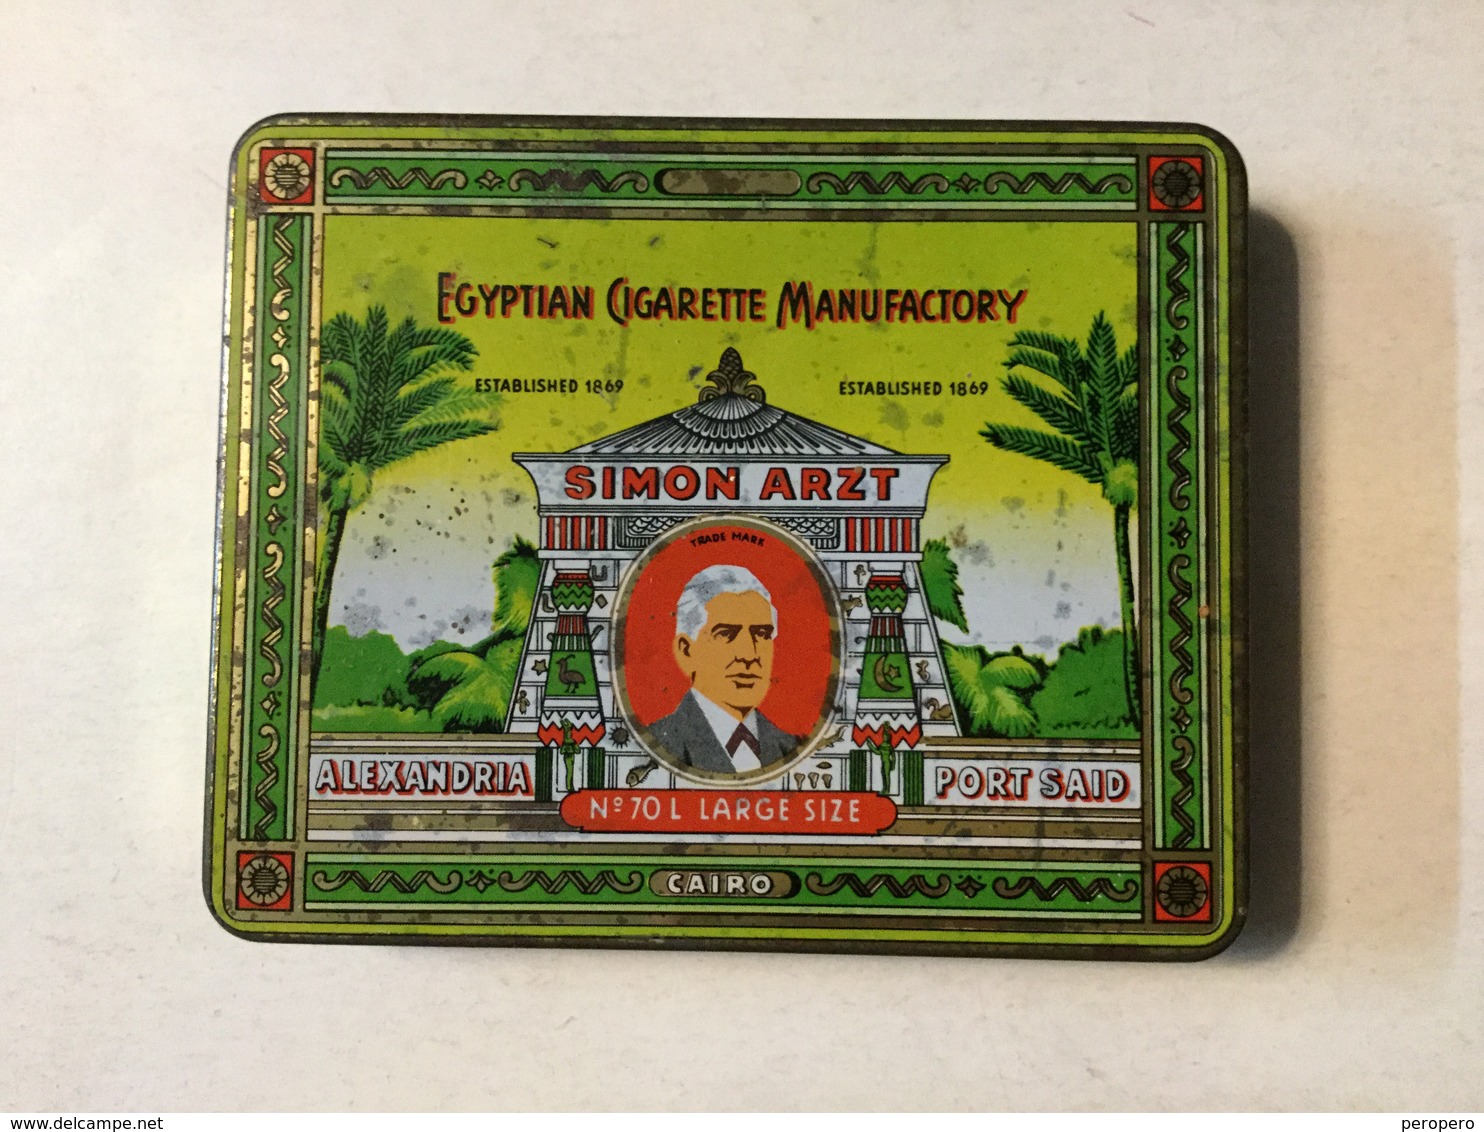 TOBACCO  TIN  BOX  EGYPTIAN CIGARETTE MANUFACTORY  SIMON ARZT - Empty Tobacco Boxes